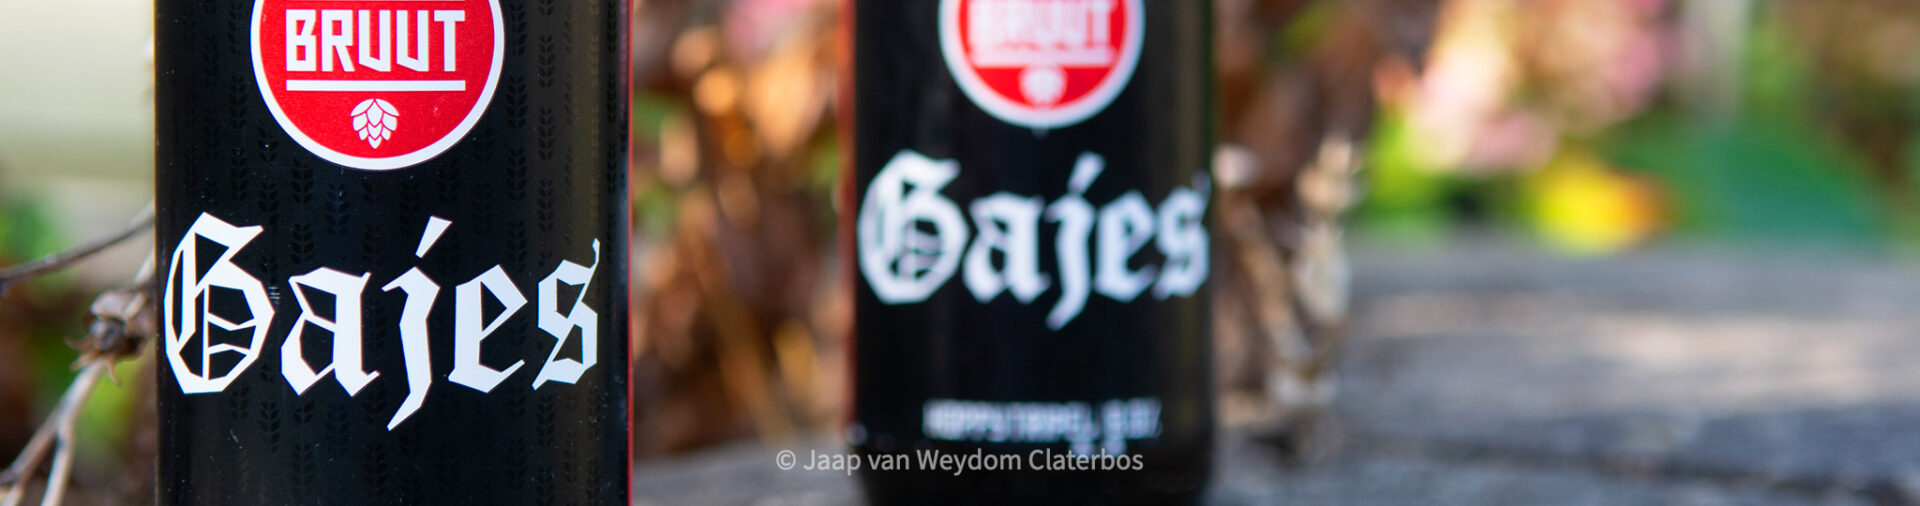 Gajes - Bruut brouwerij te Amsterdam